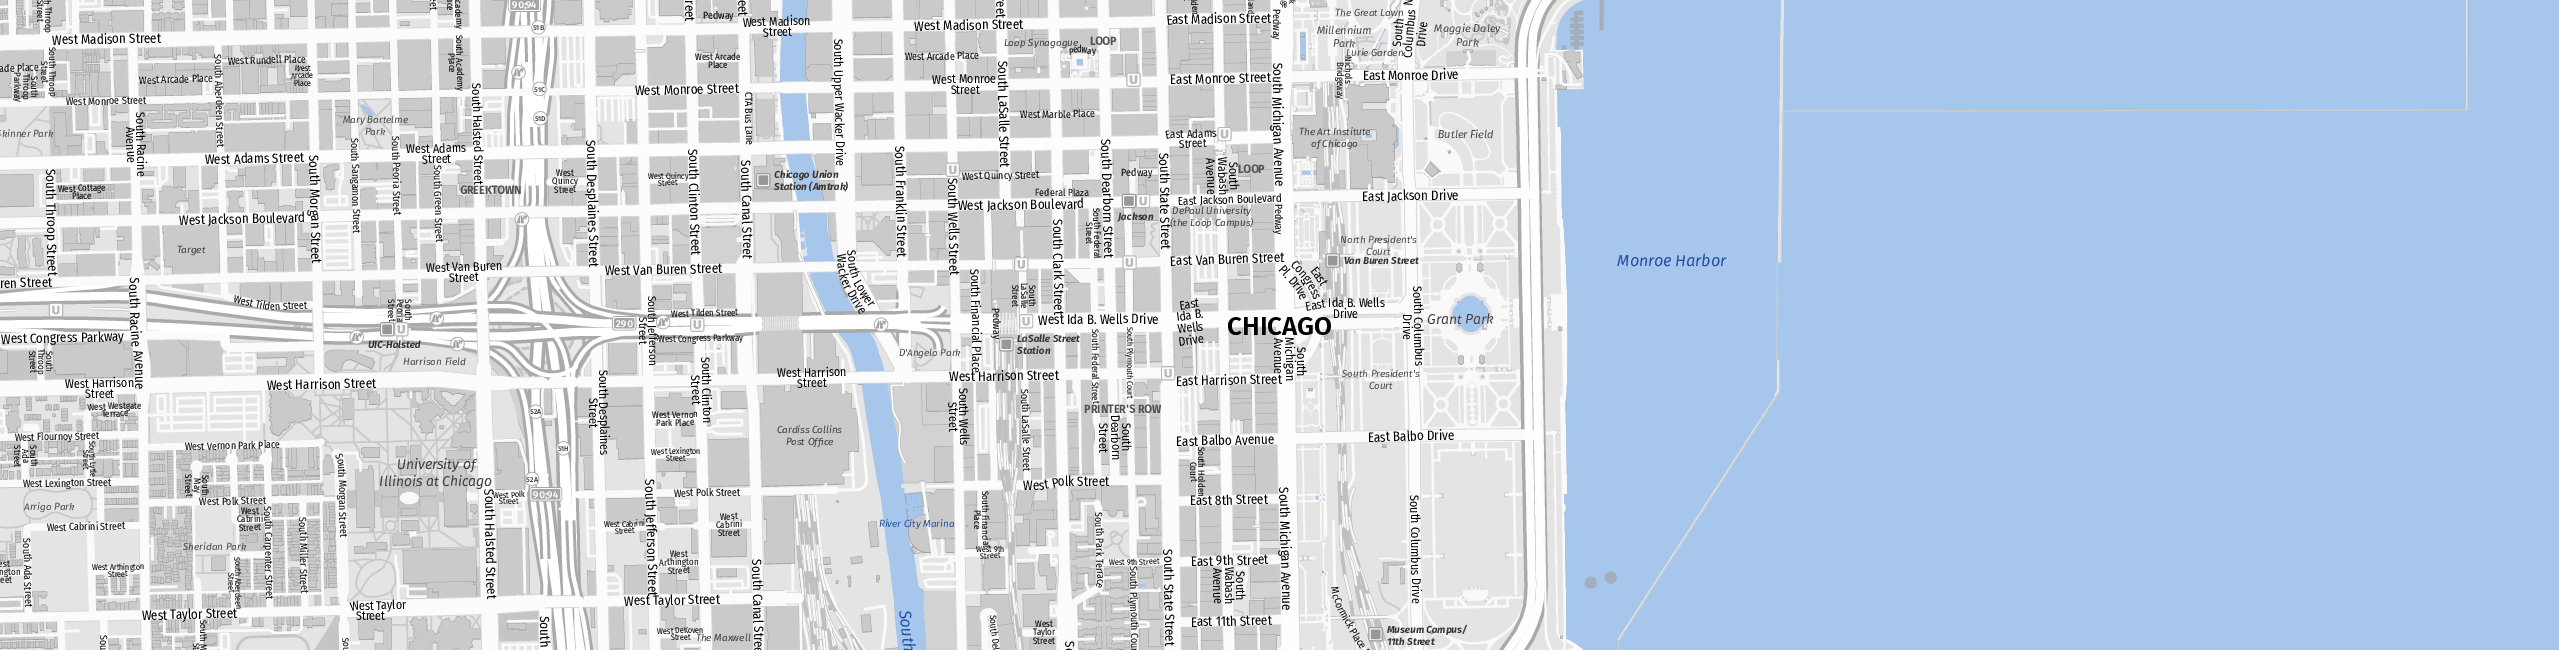 Stadtplan Chicago zum Downloaden.